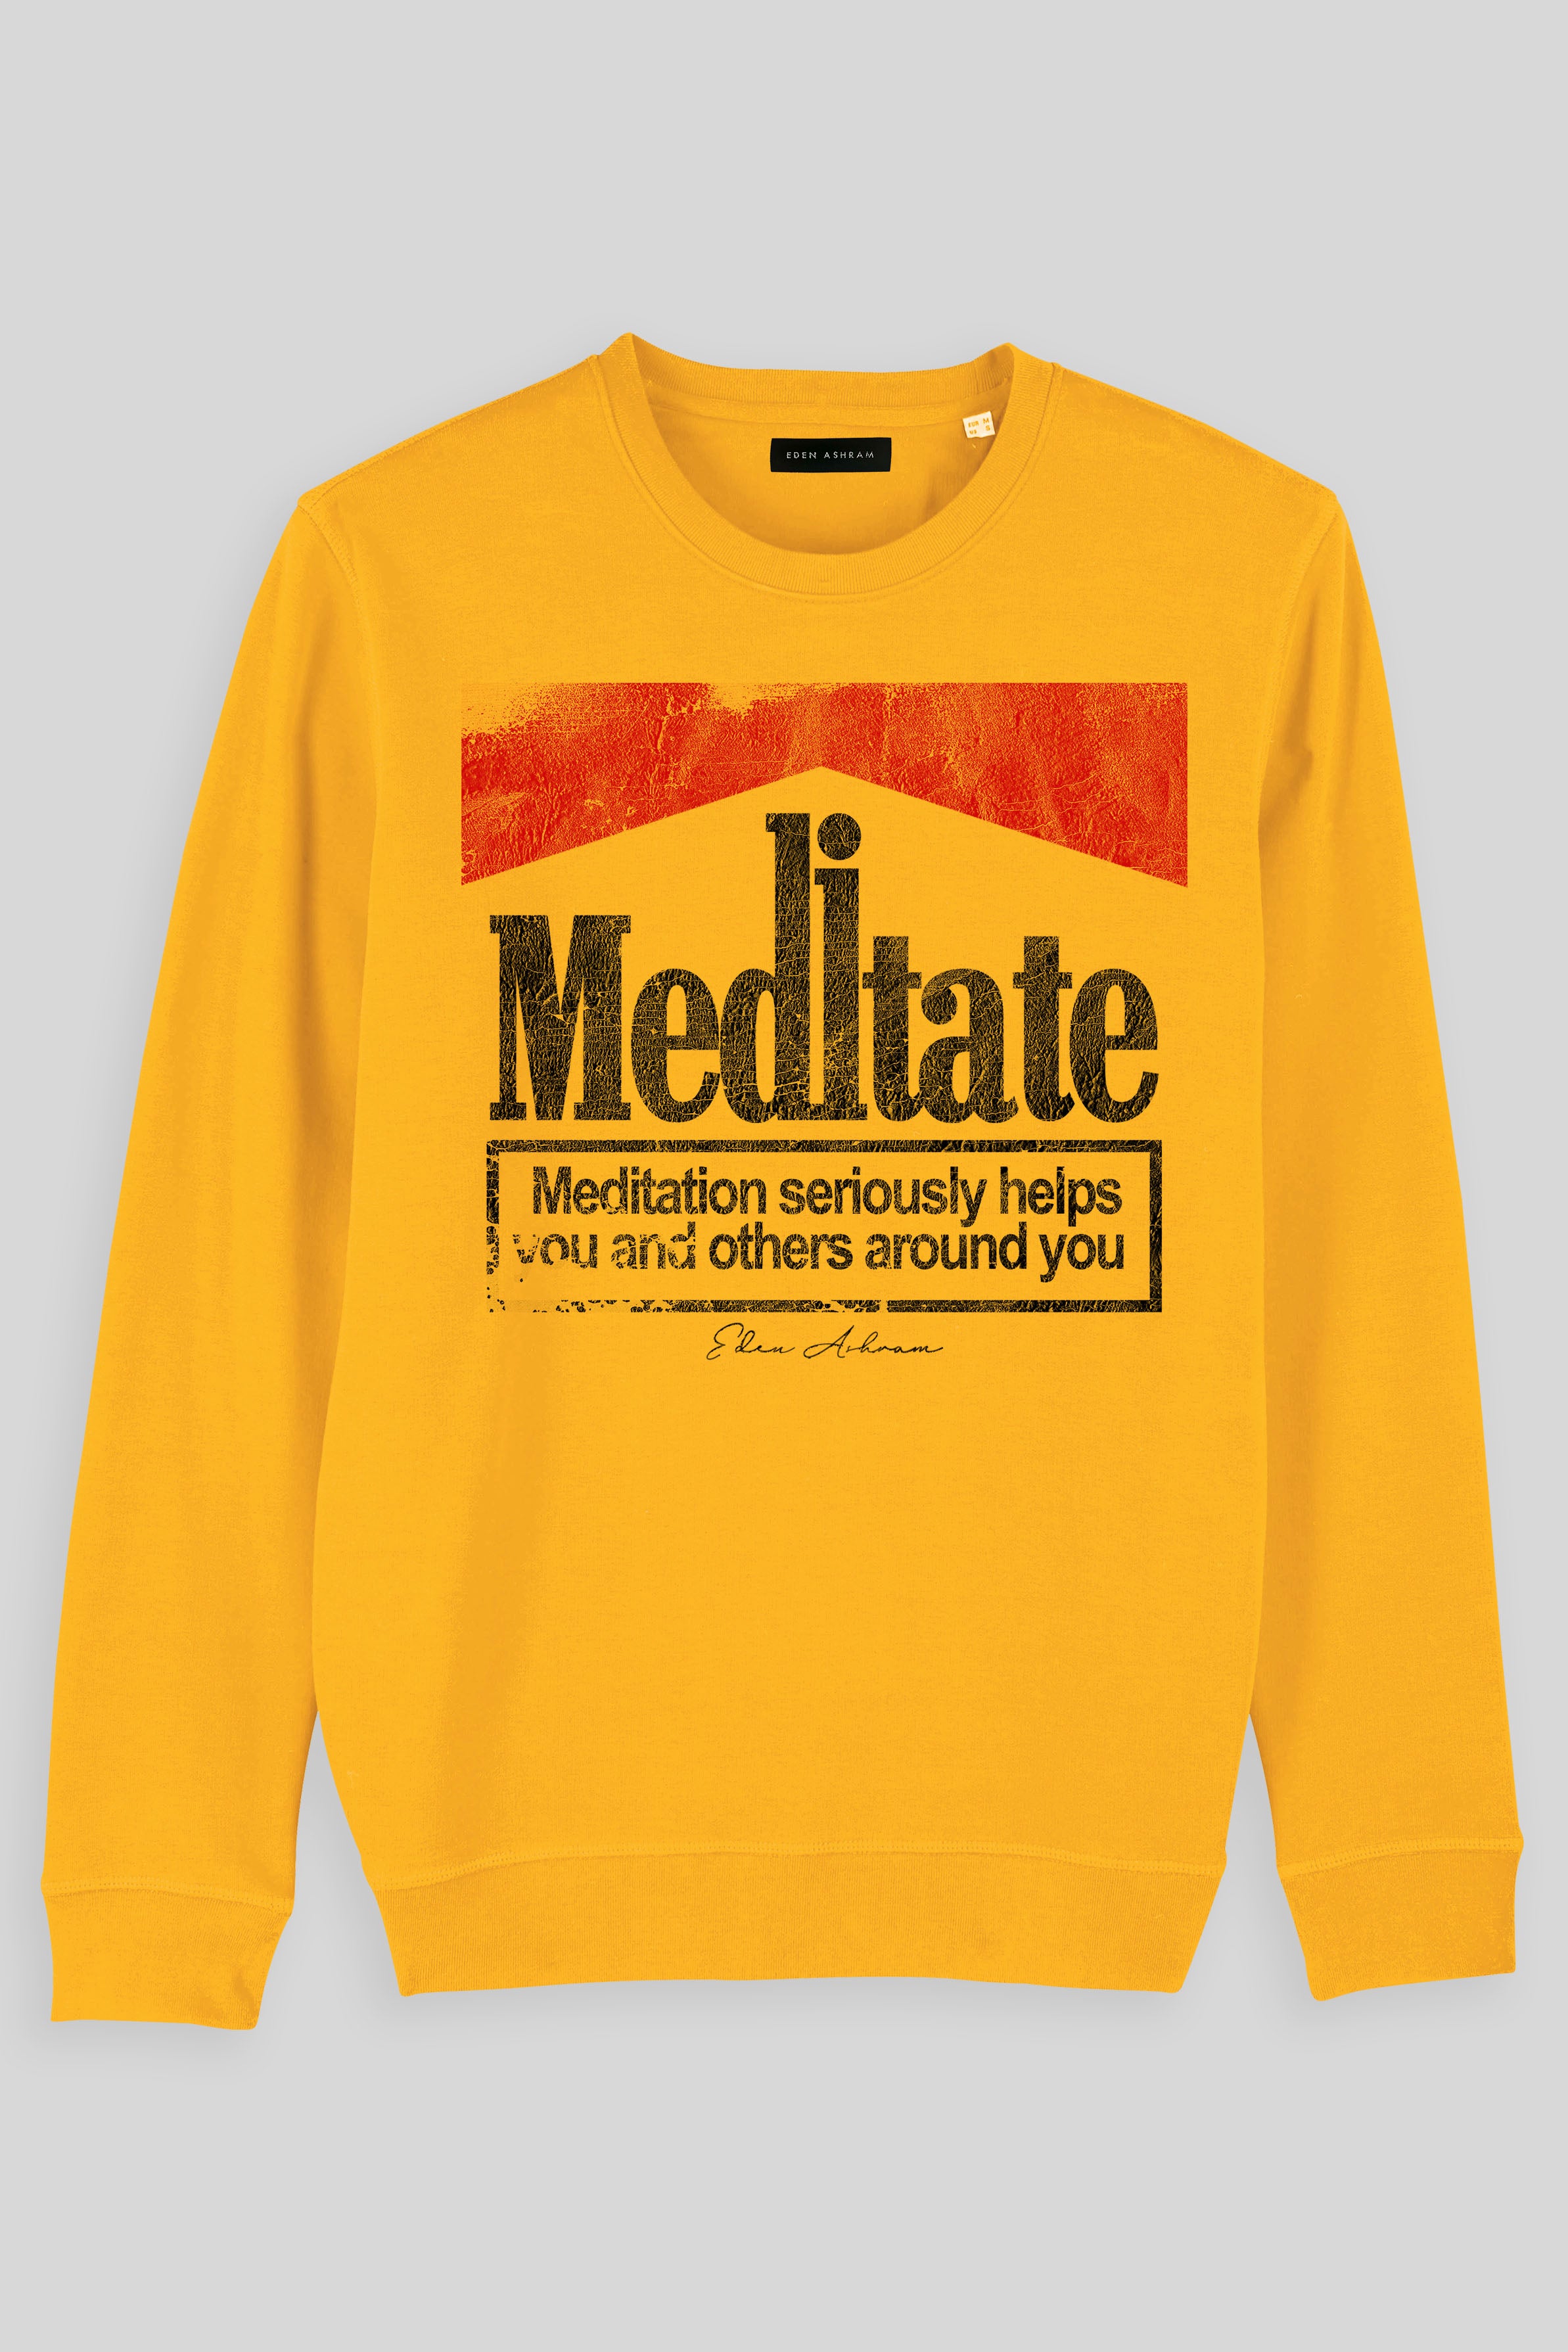 Eden Ashram Meditate 2.0 Premium Crew Neck Sweatshirt Spectra Yellow | Warning